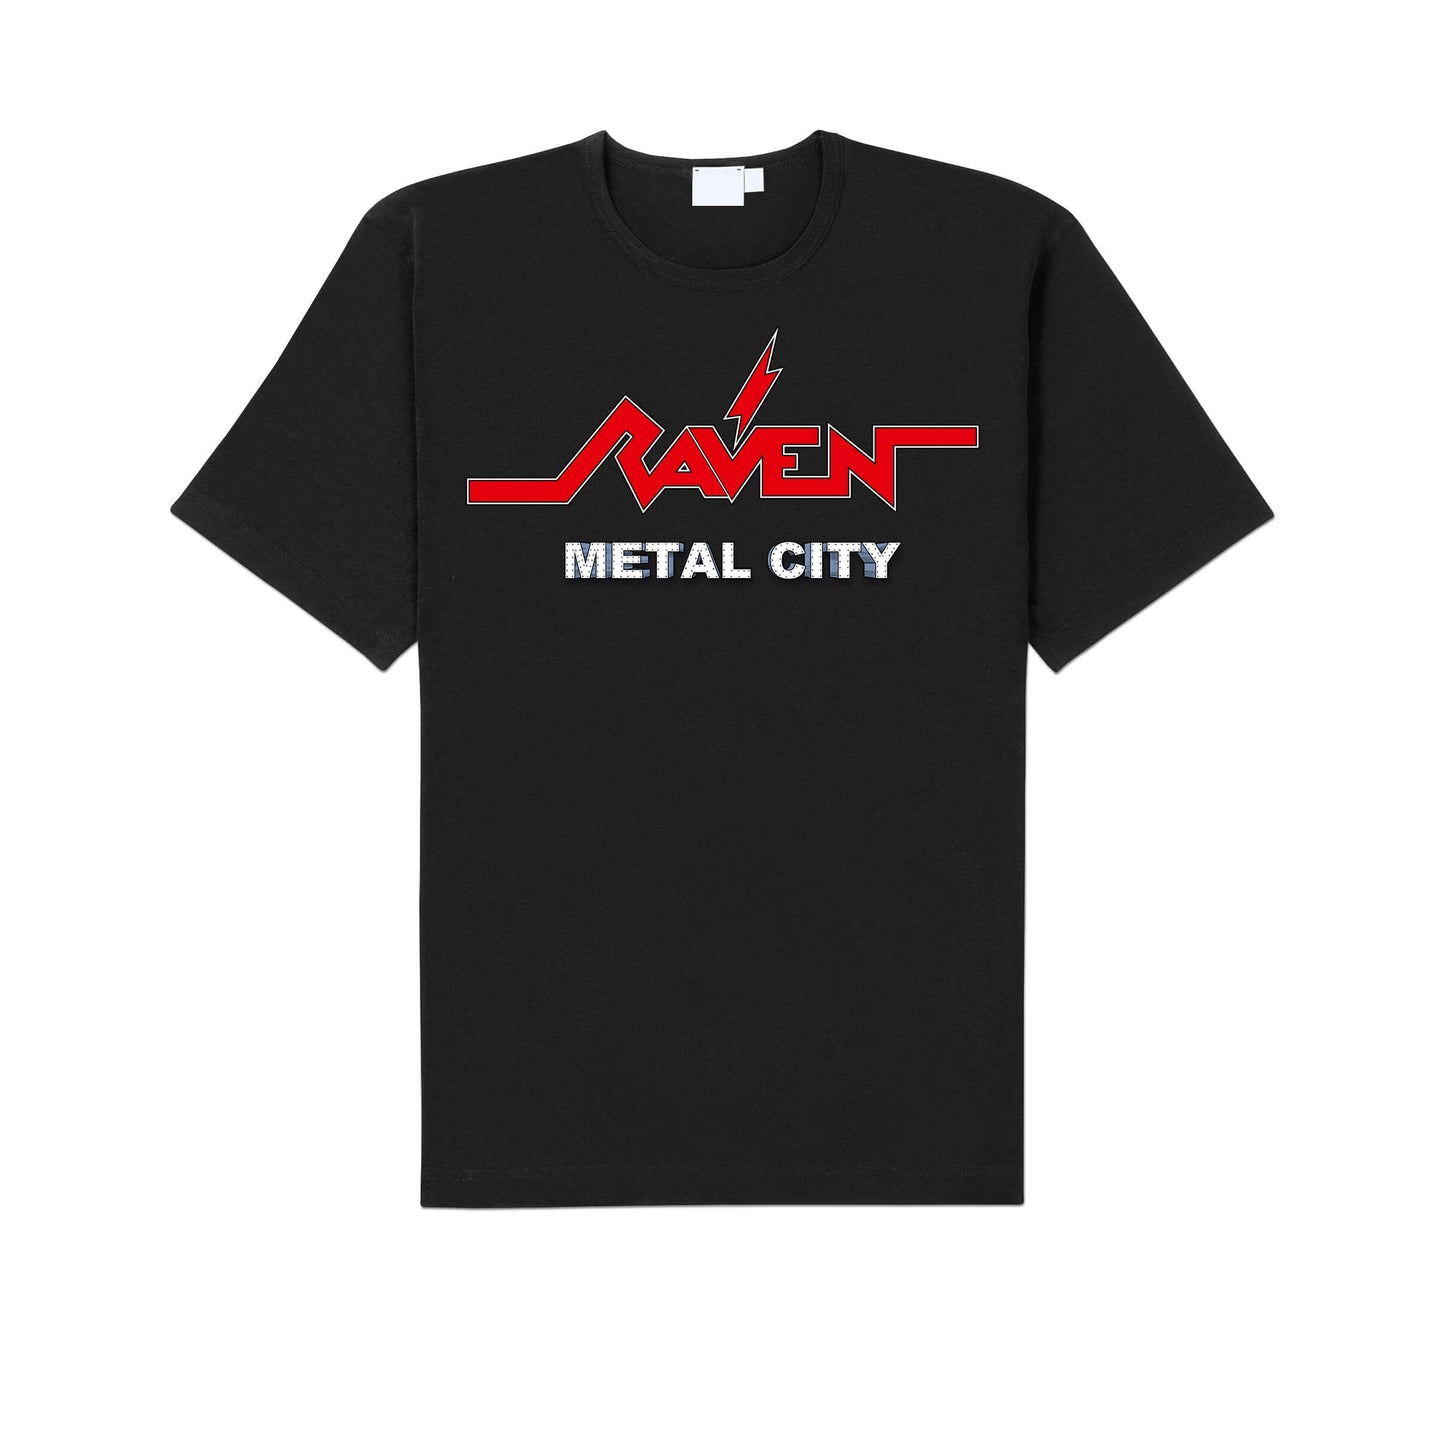 Raven "City" Shirt